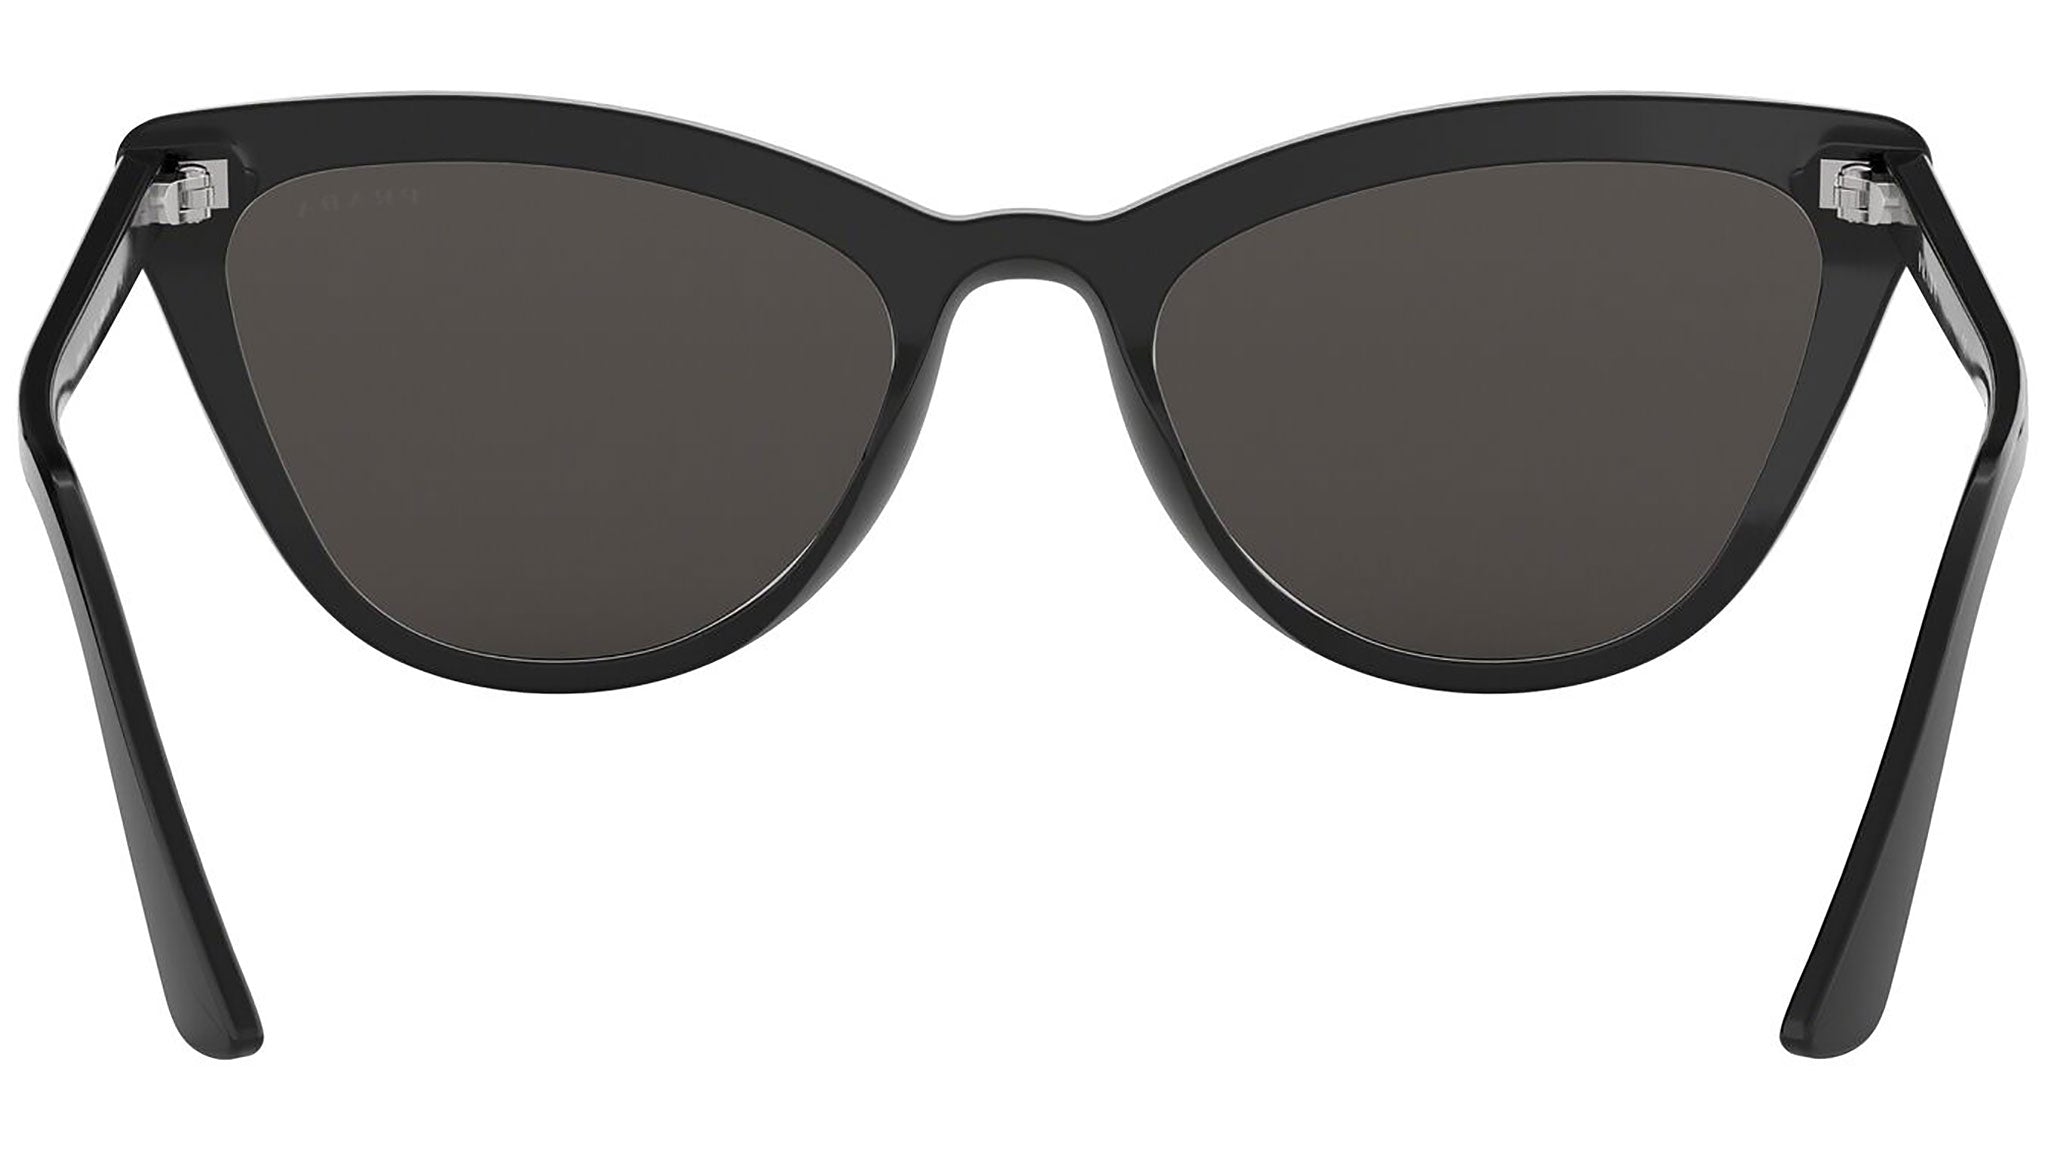 Prada PR 01VS Sunglasses: Timeless Black Elegance